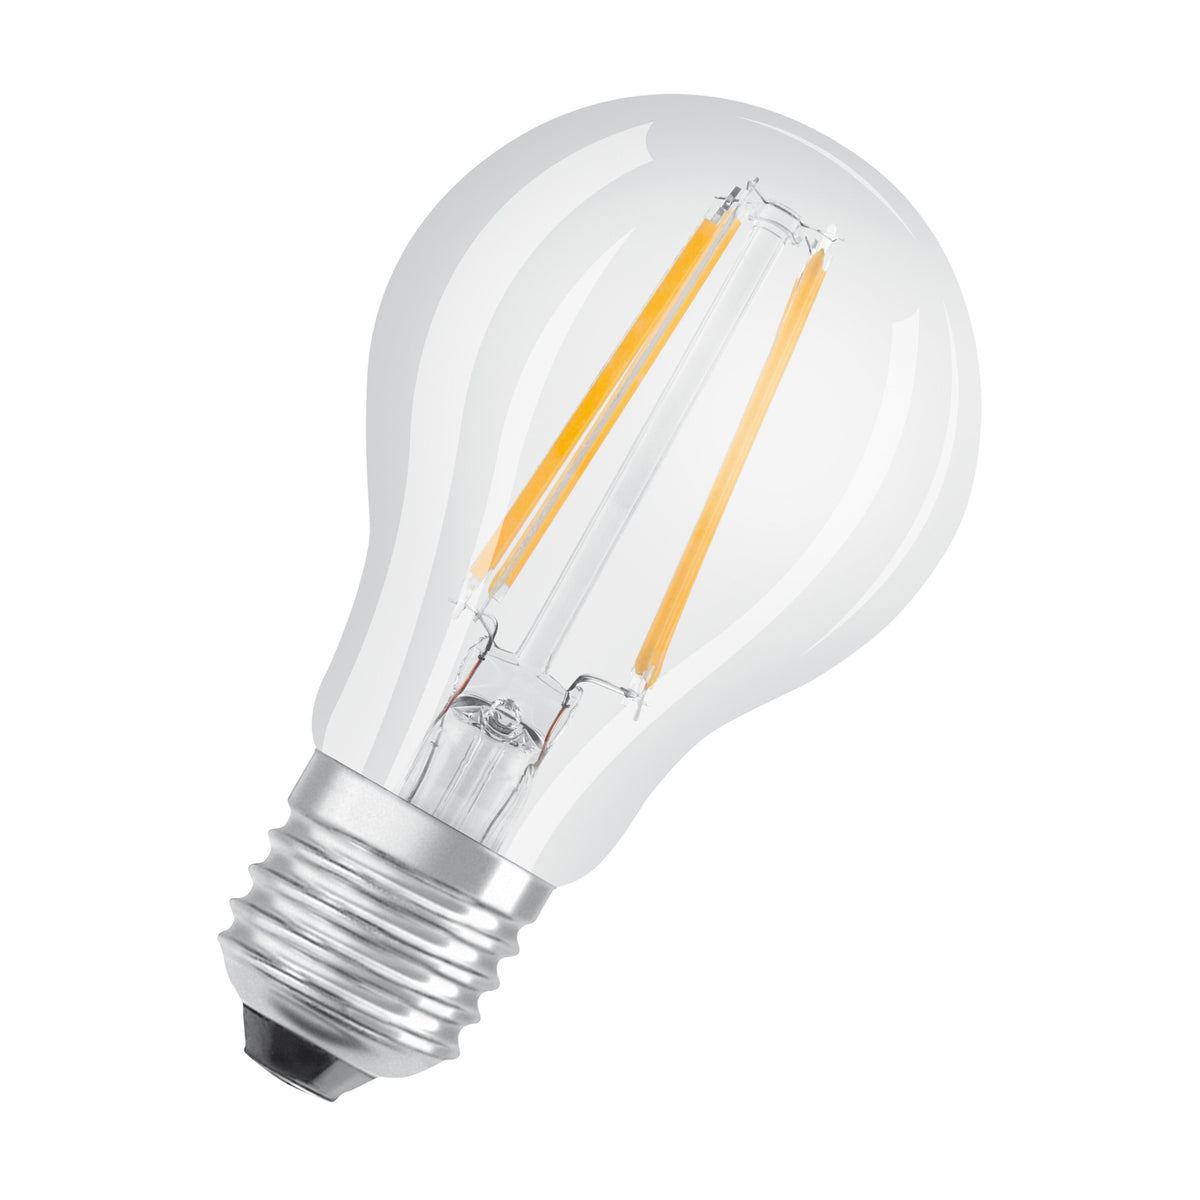 BELLALUX LED-Lampe, Sockel: E27, Warm White, 2700 K, 7 W, Ersatz für 60-W-Glühbirne, klar, ST CLAS A